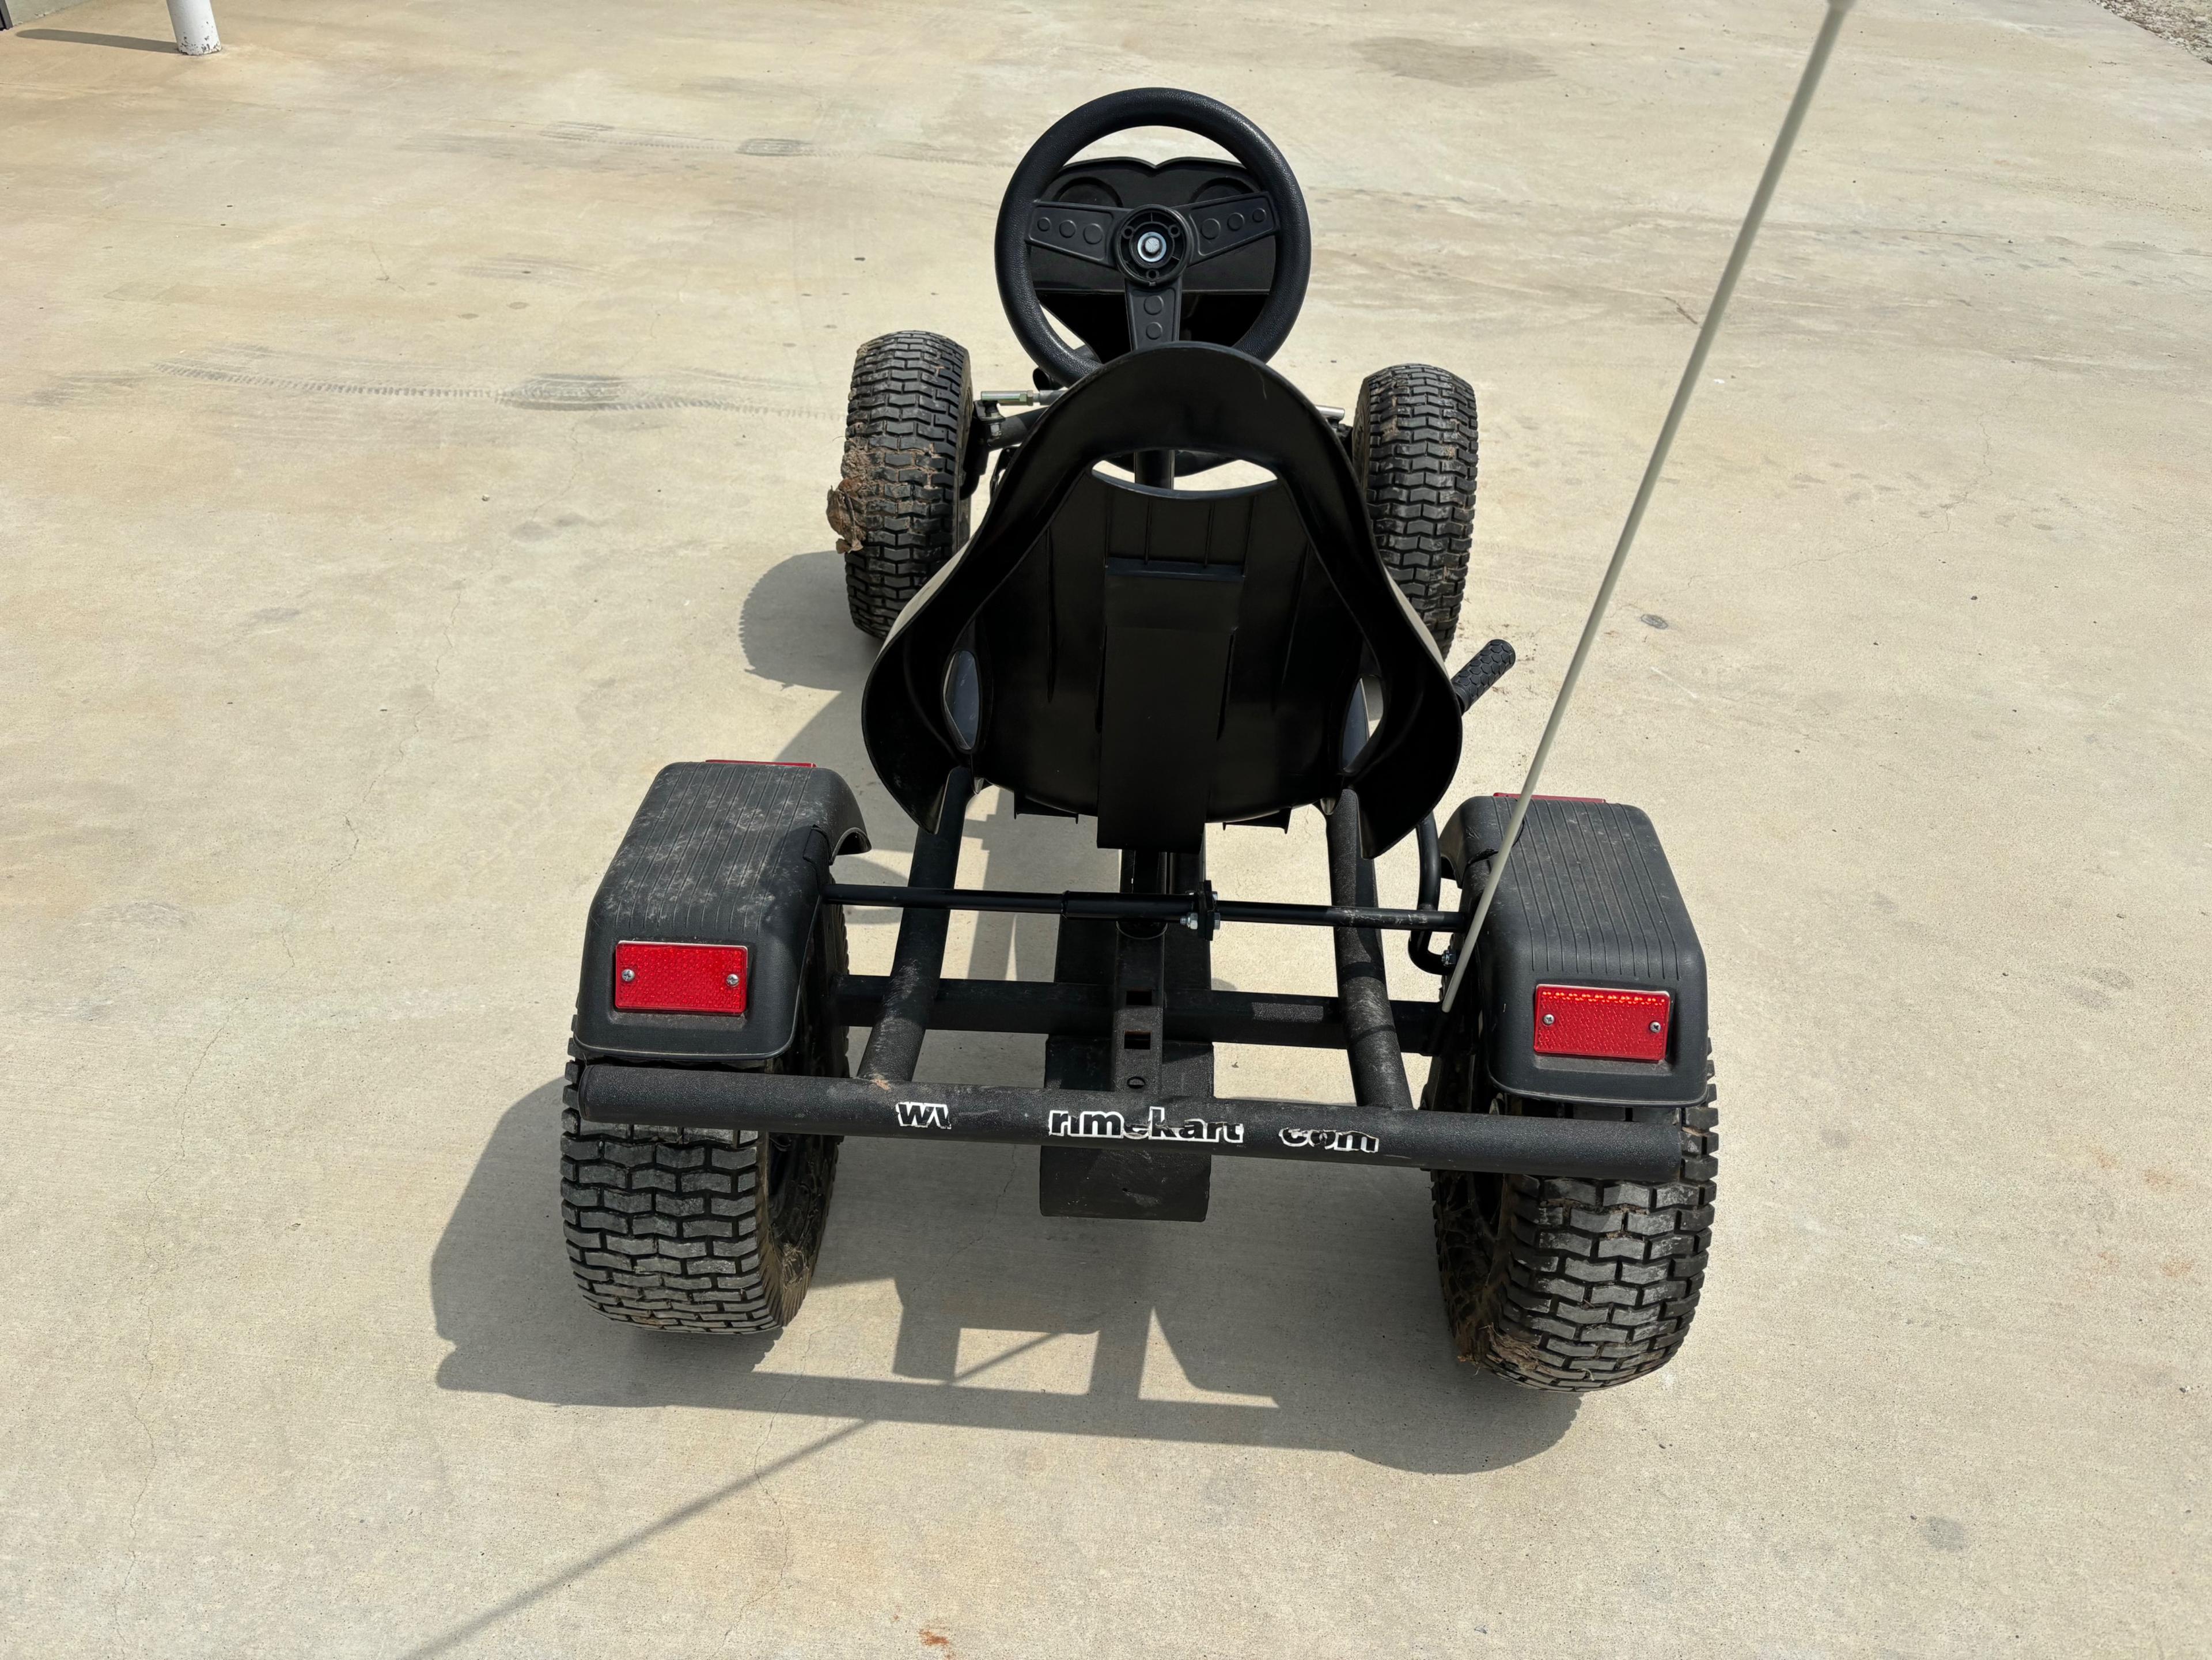 PrimeKart Pedal Powered Cart